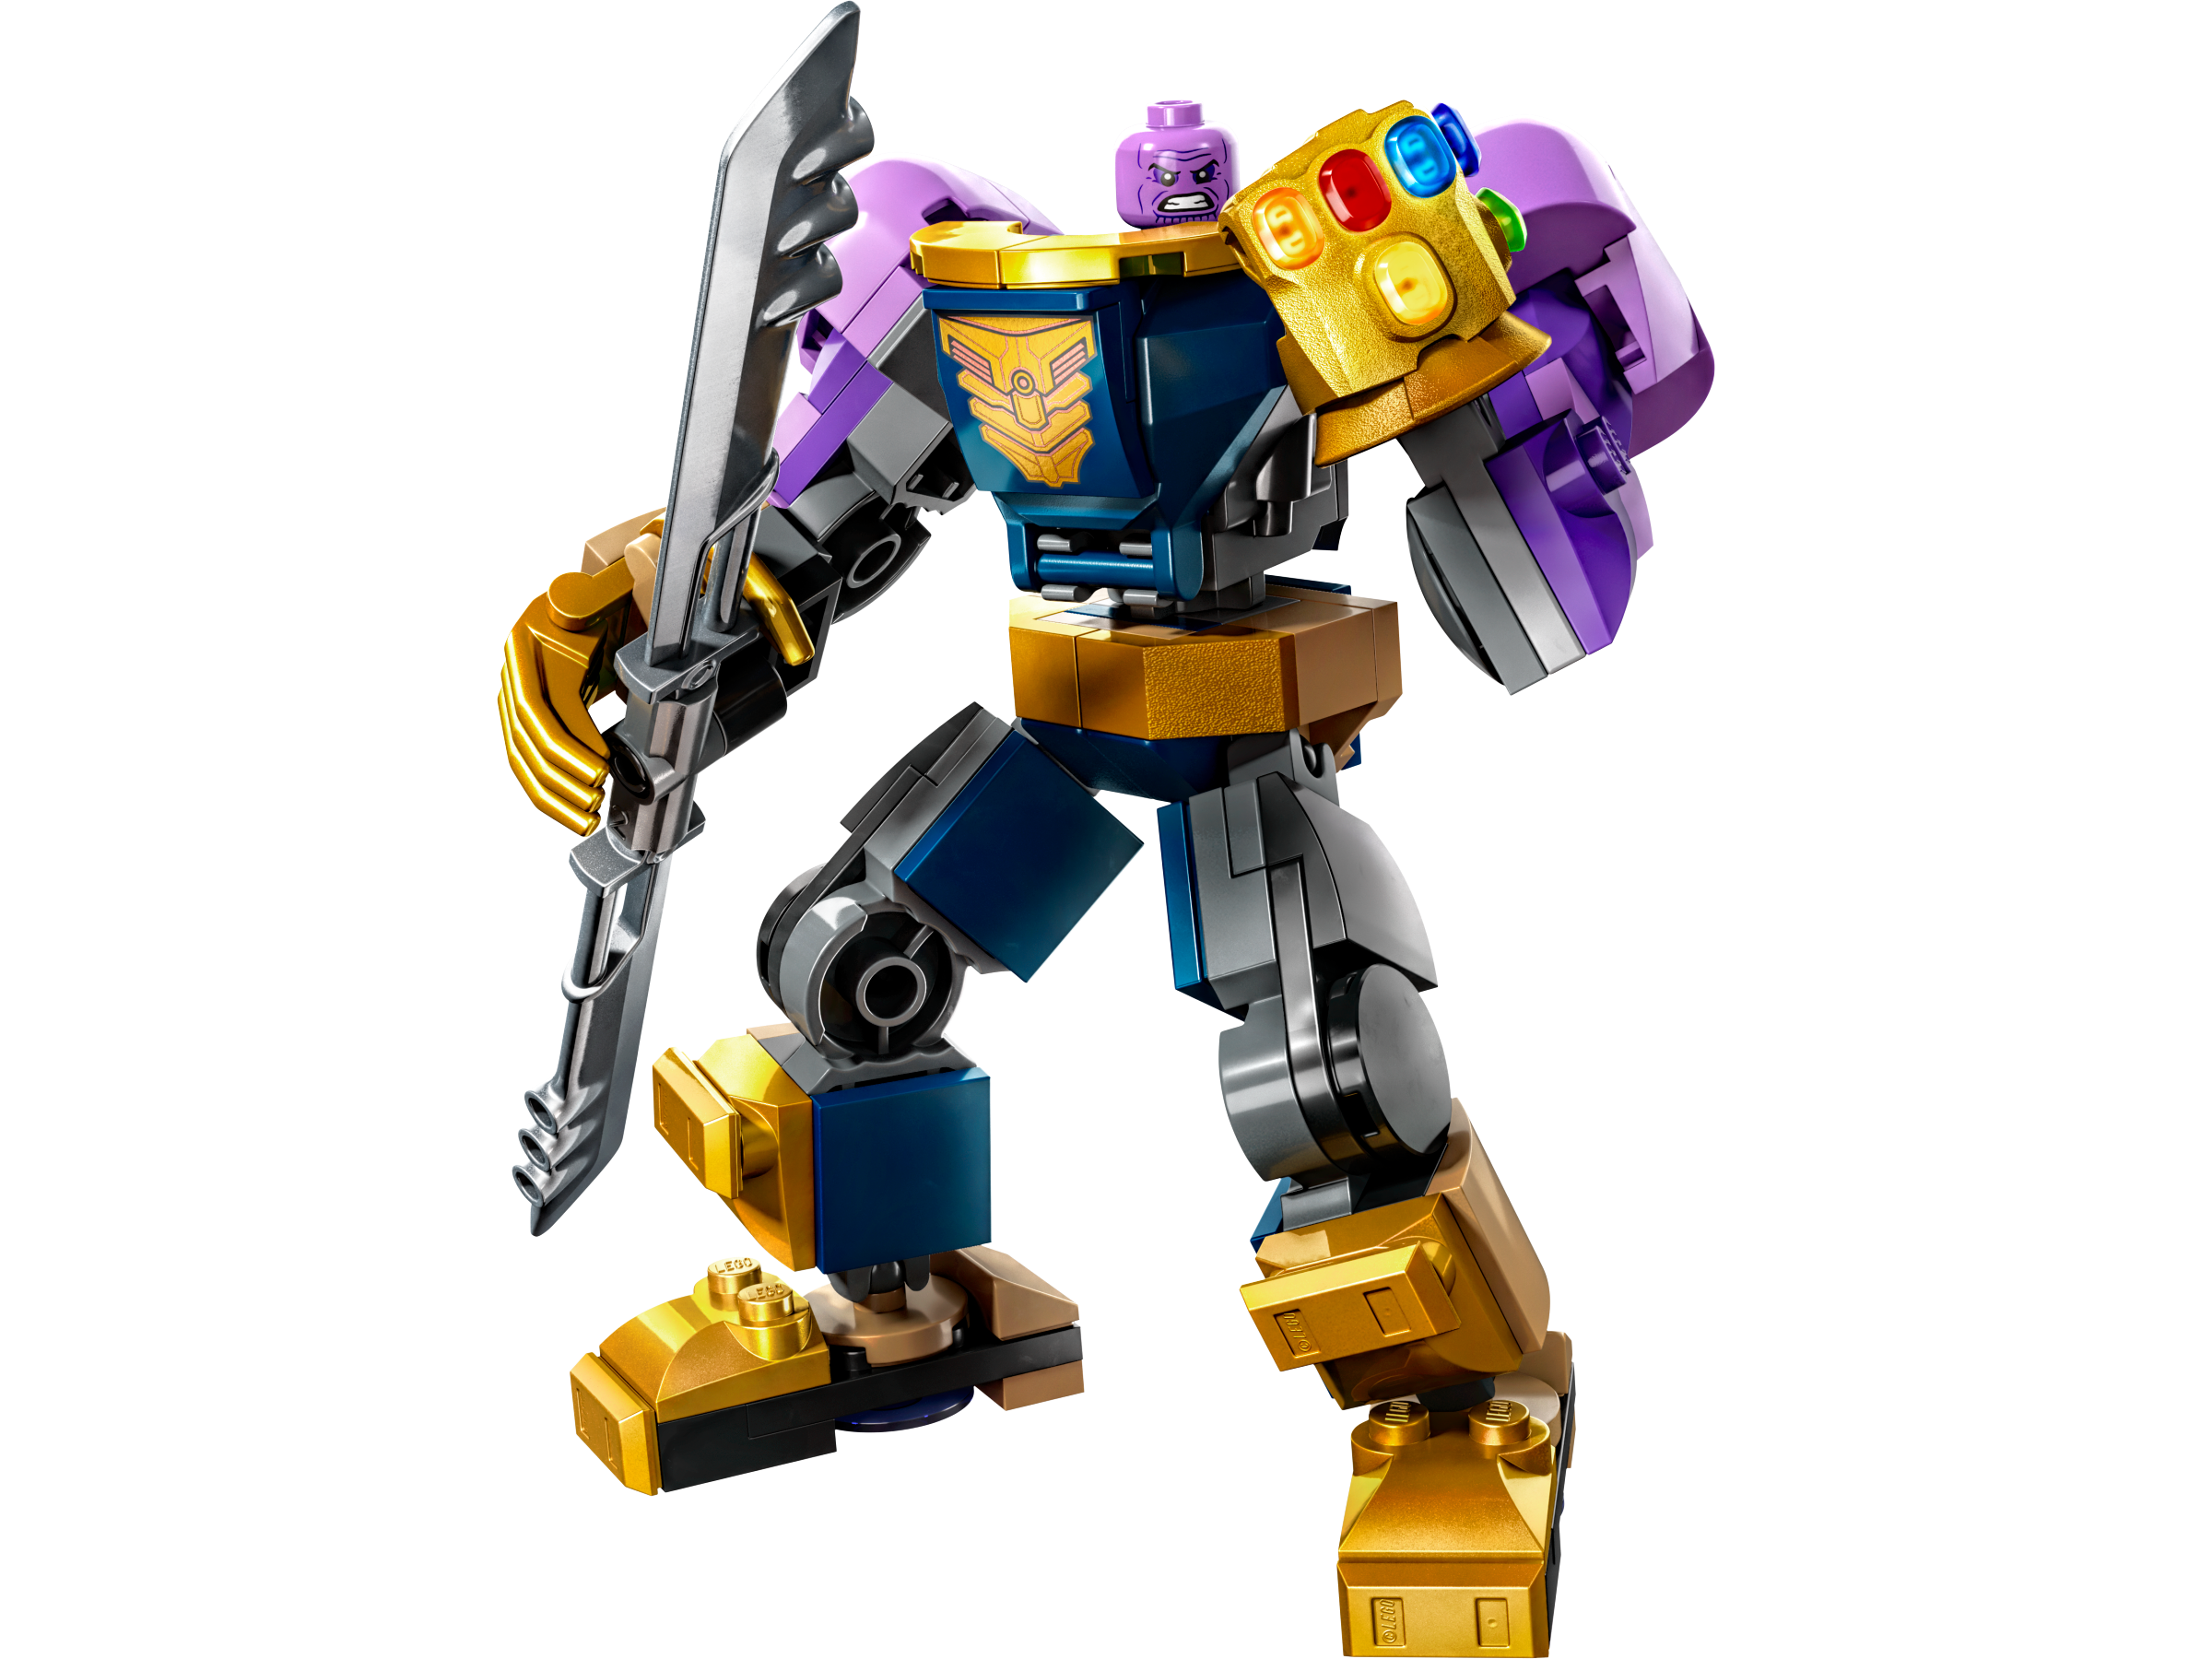 LEGO® Marvel Super Heroes 76242 Thanos Mech